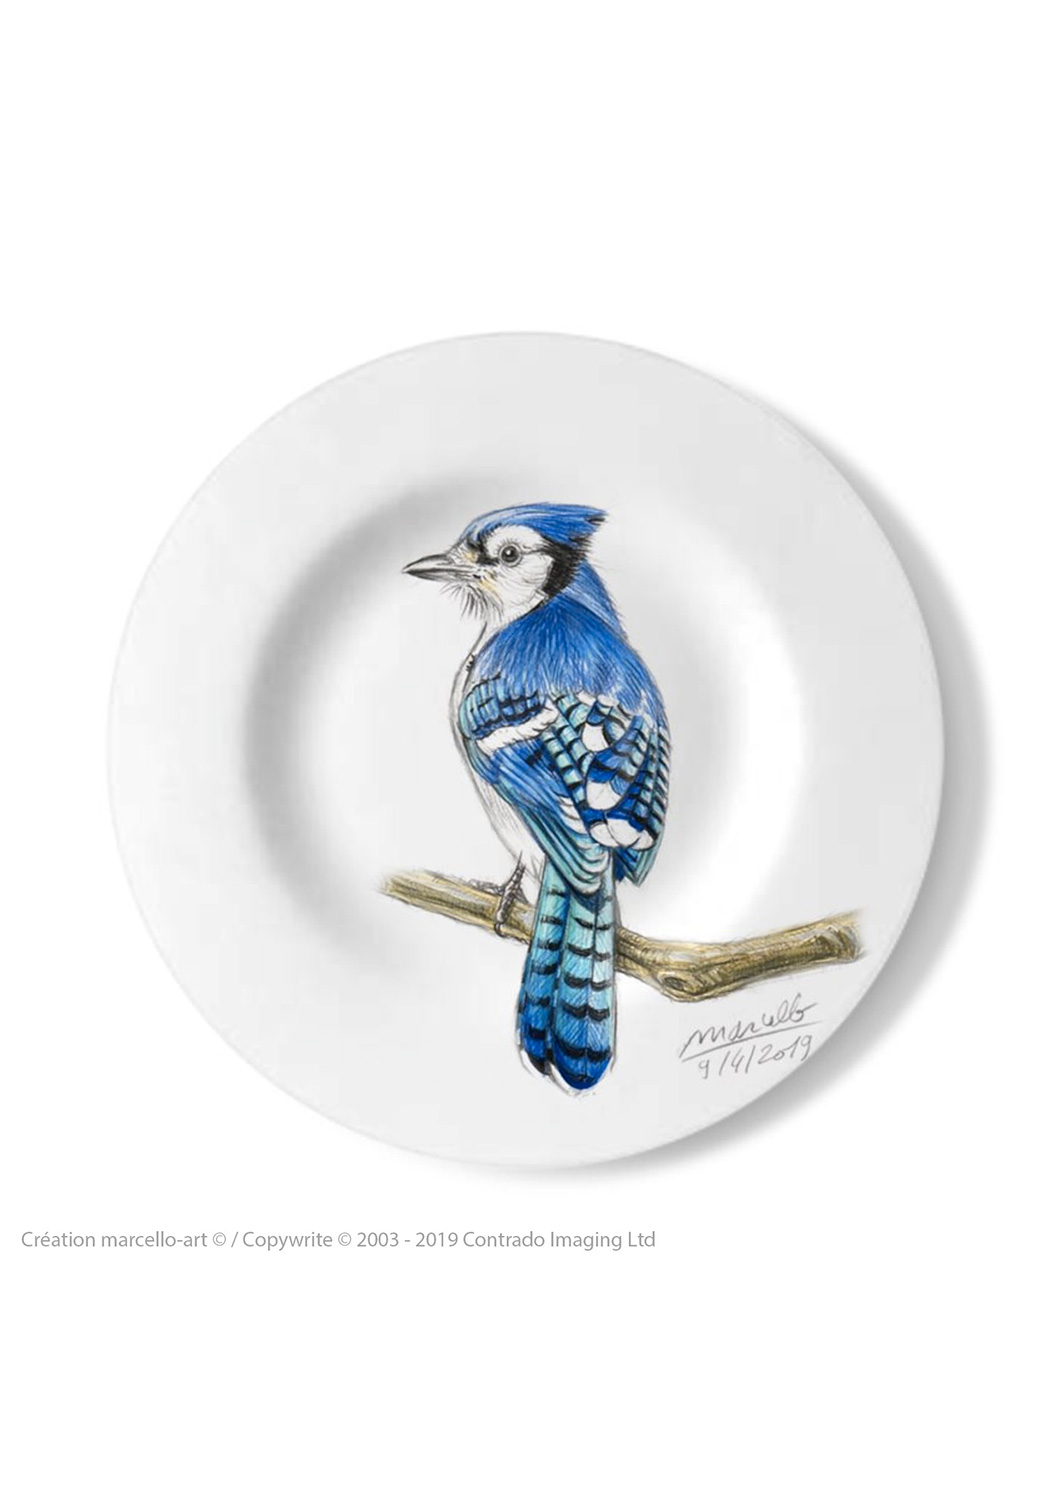 Marcello-art: Decorating Plates Decoration plates 393 blue jay